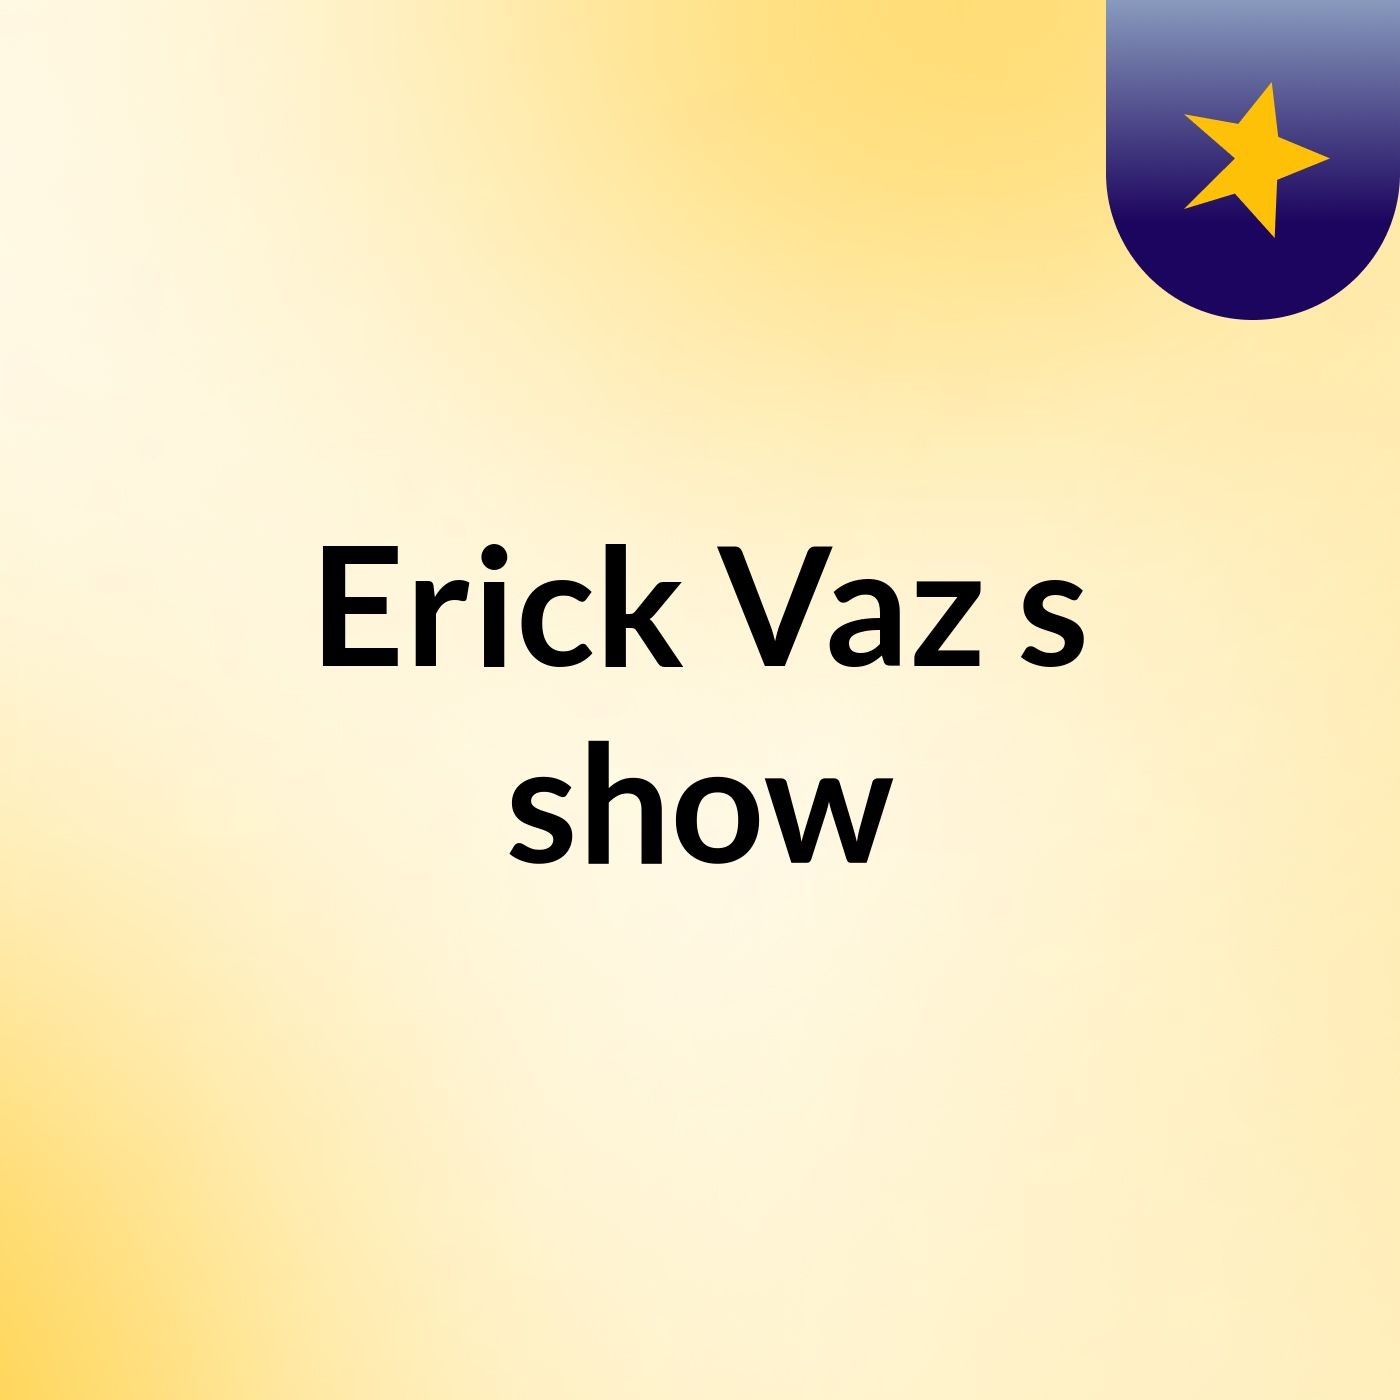 Erick Vaz's show